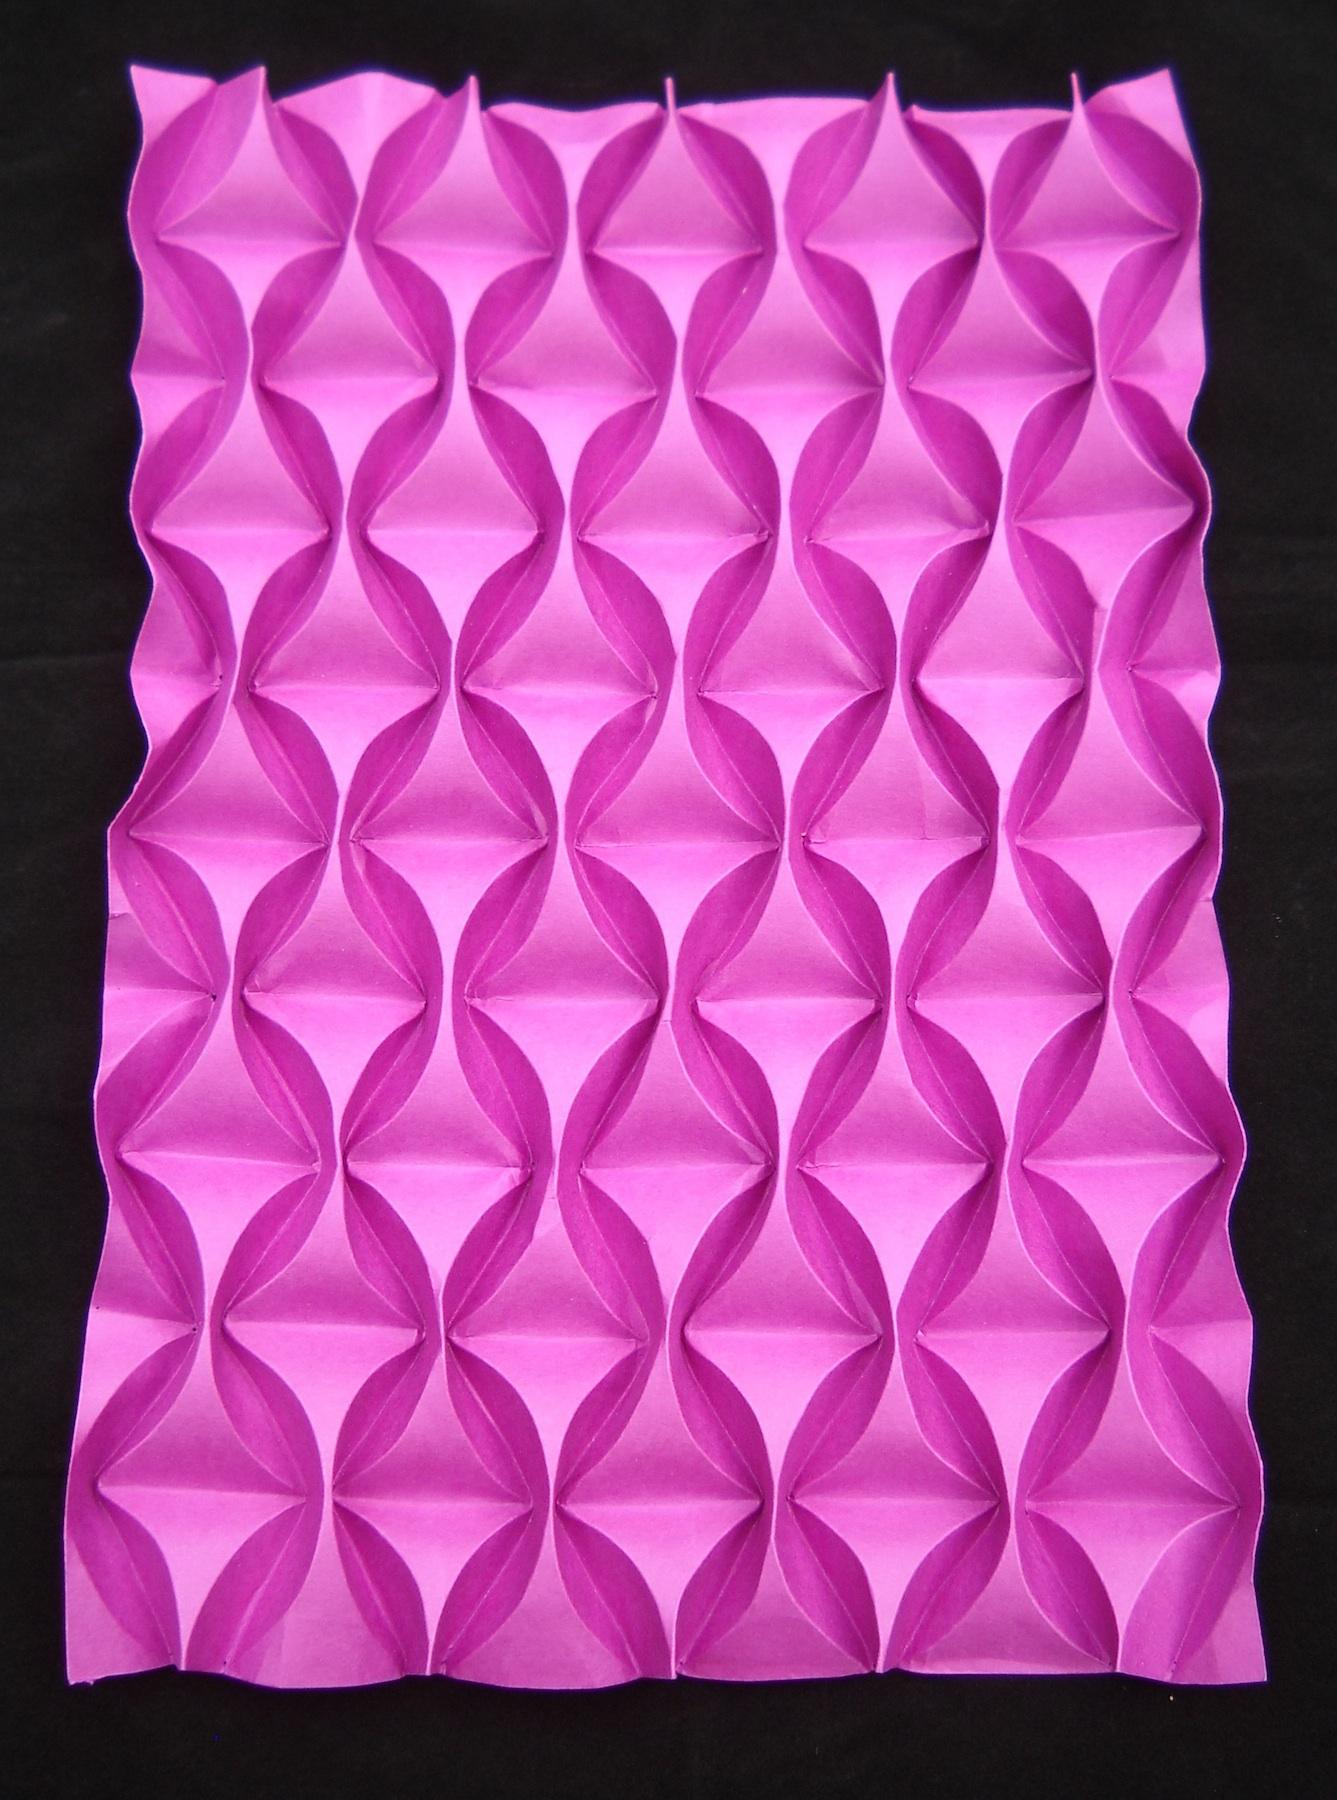 Image for entry 'Smocking Tessellation'